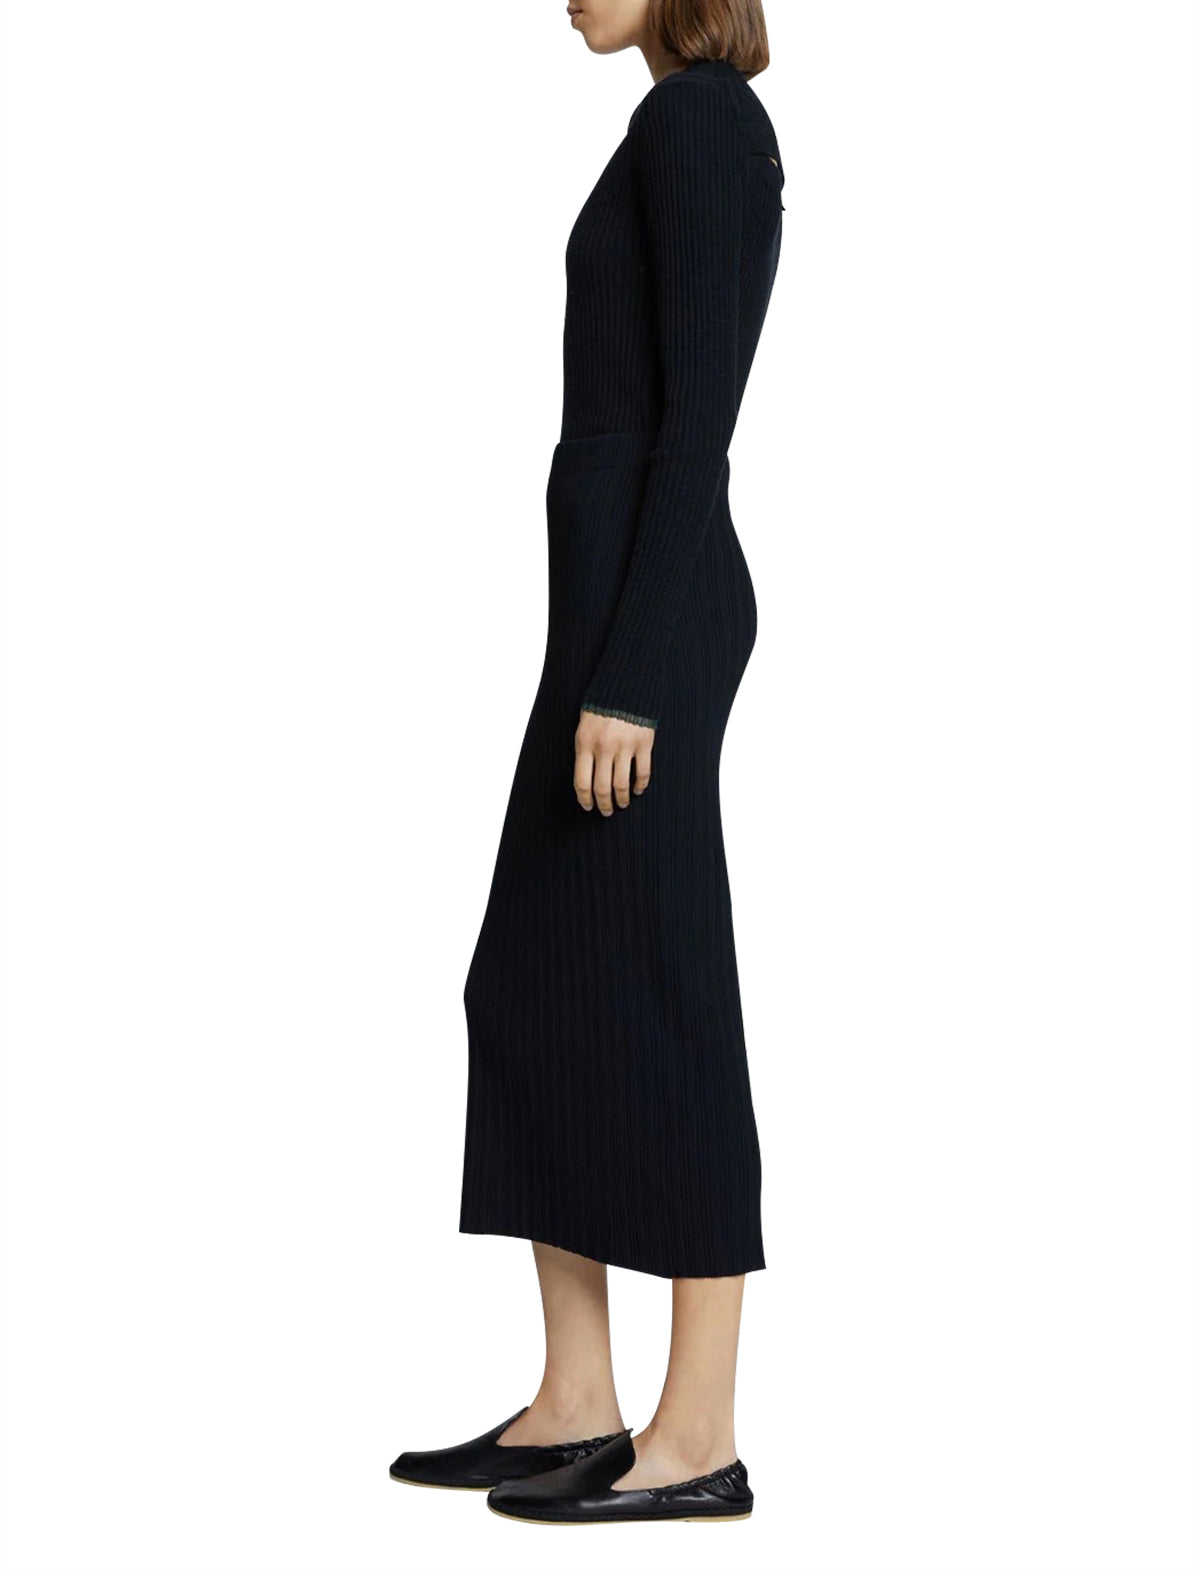 PROENZA SCHOULER WHITE LABEL Rib Knit Skirt in Black